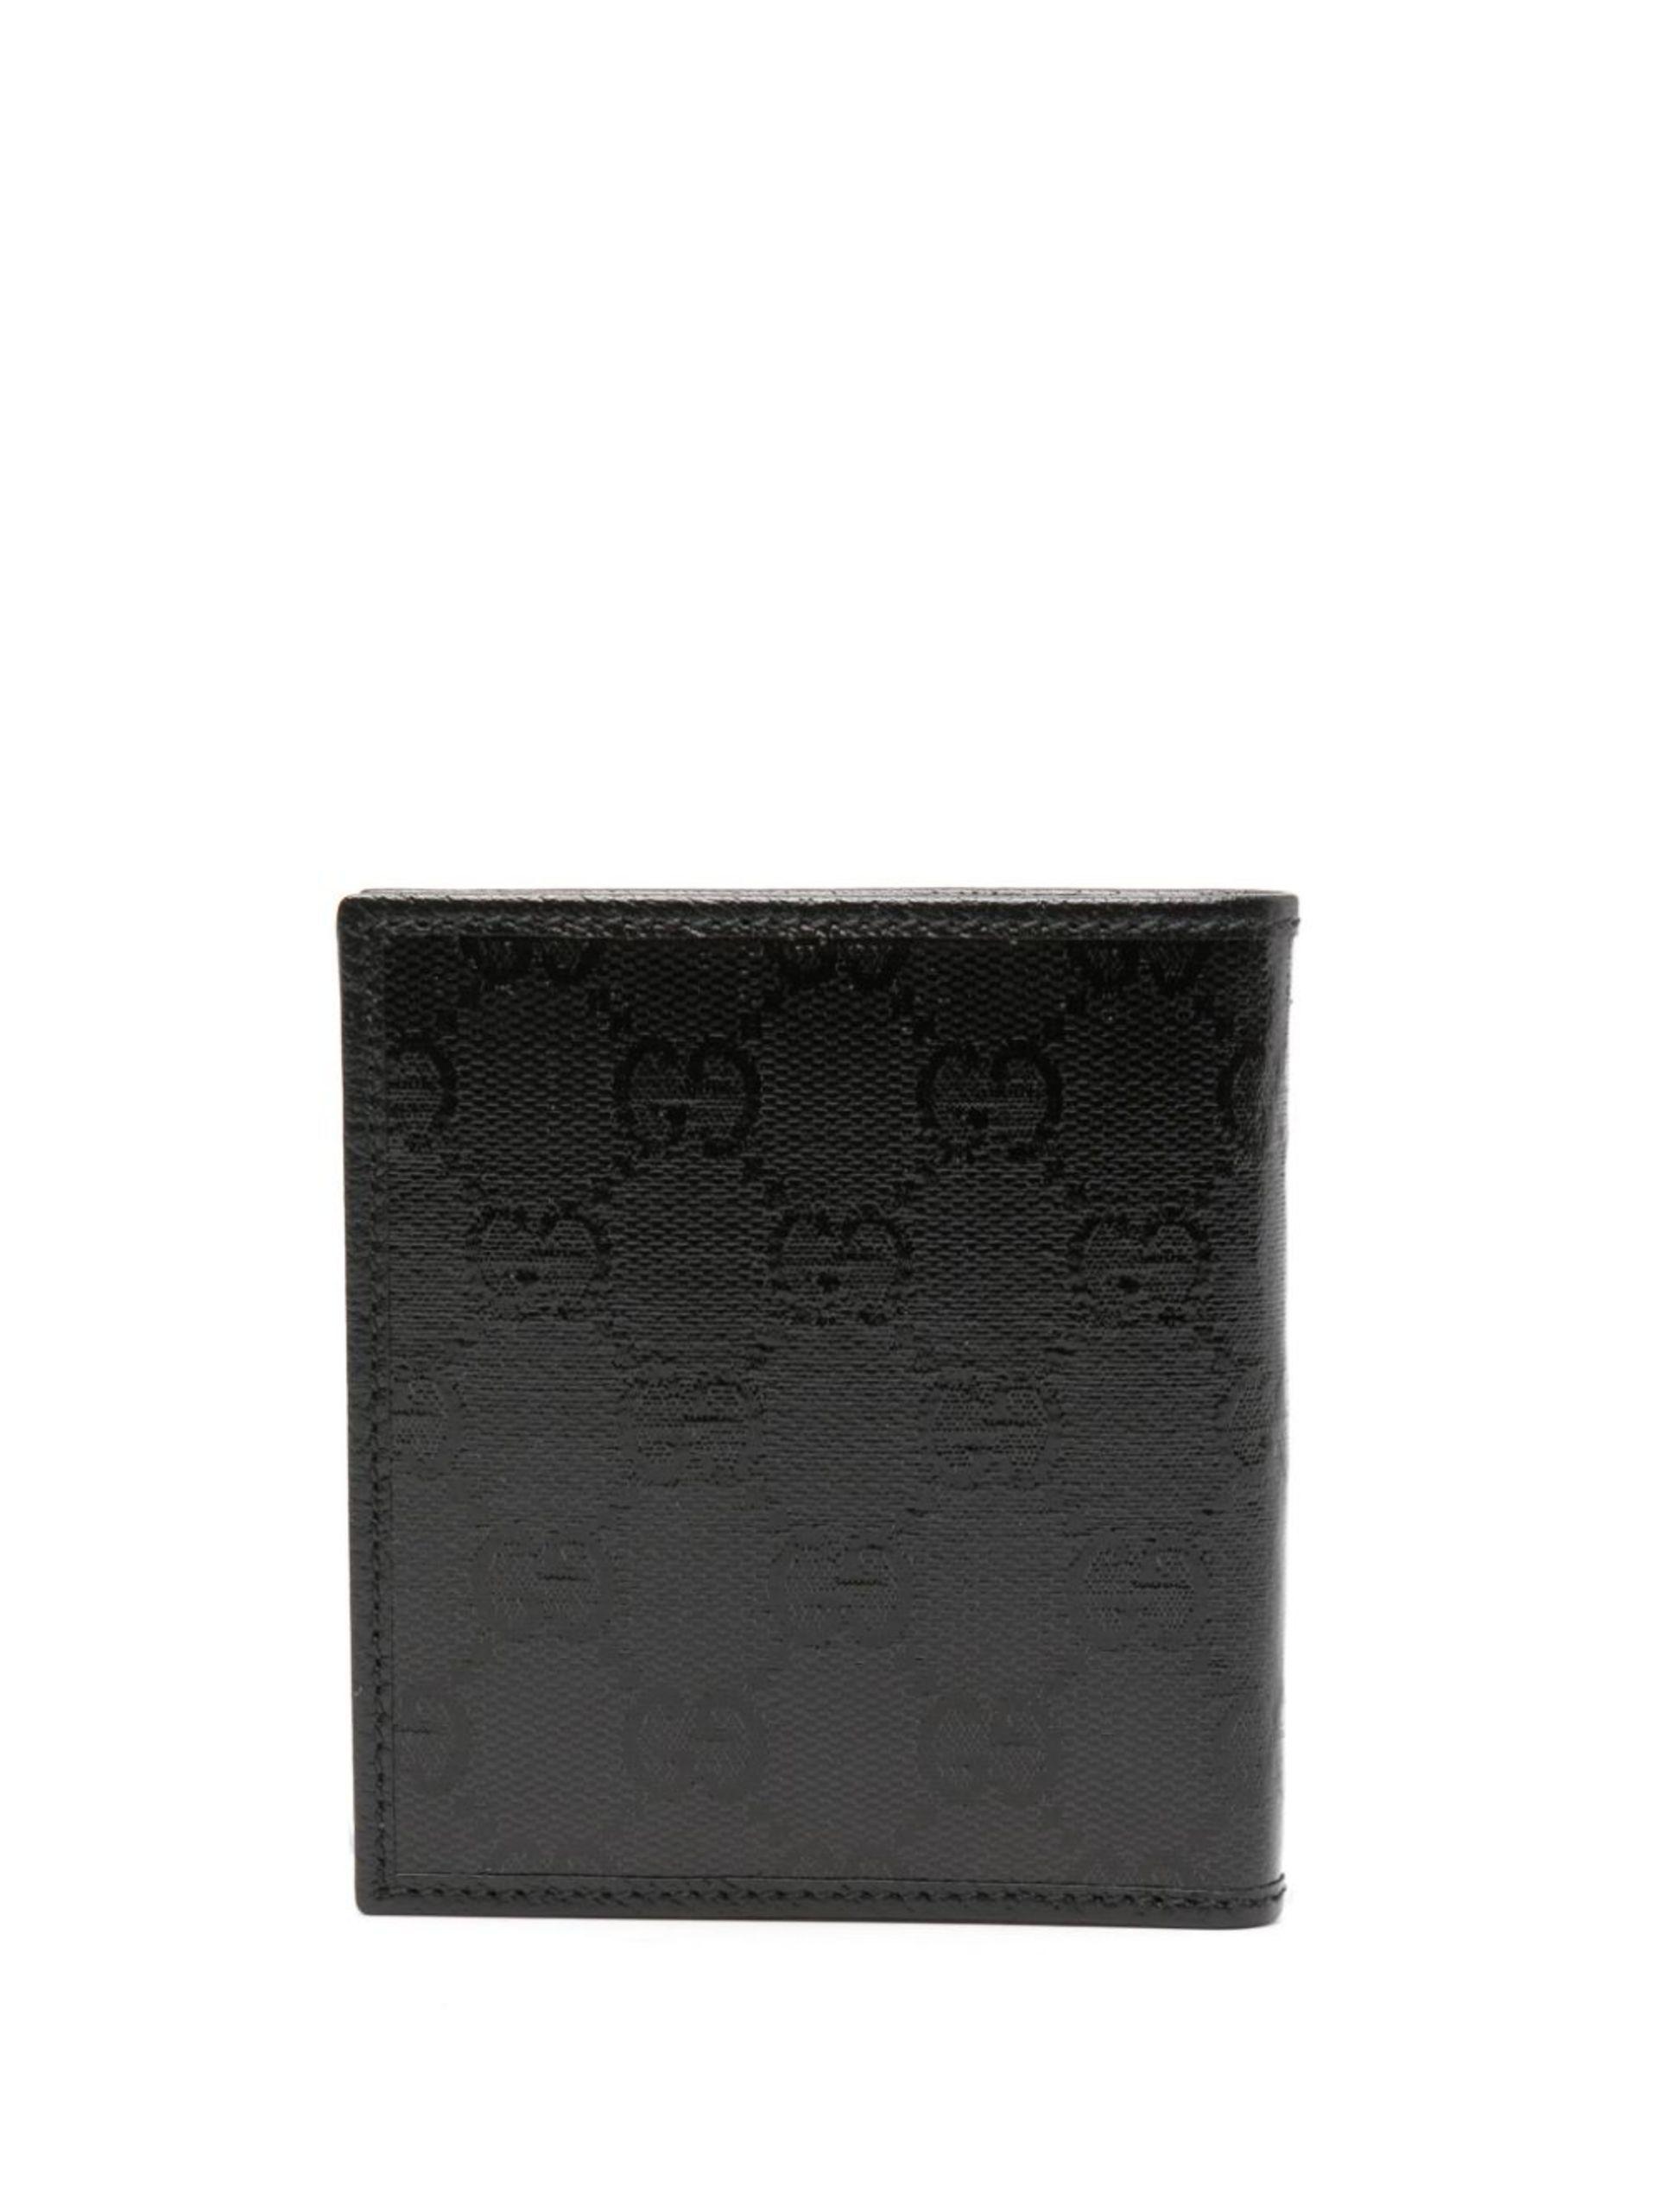 Gucci Black Leather GG Guccisima Bifold Men's Wallet